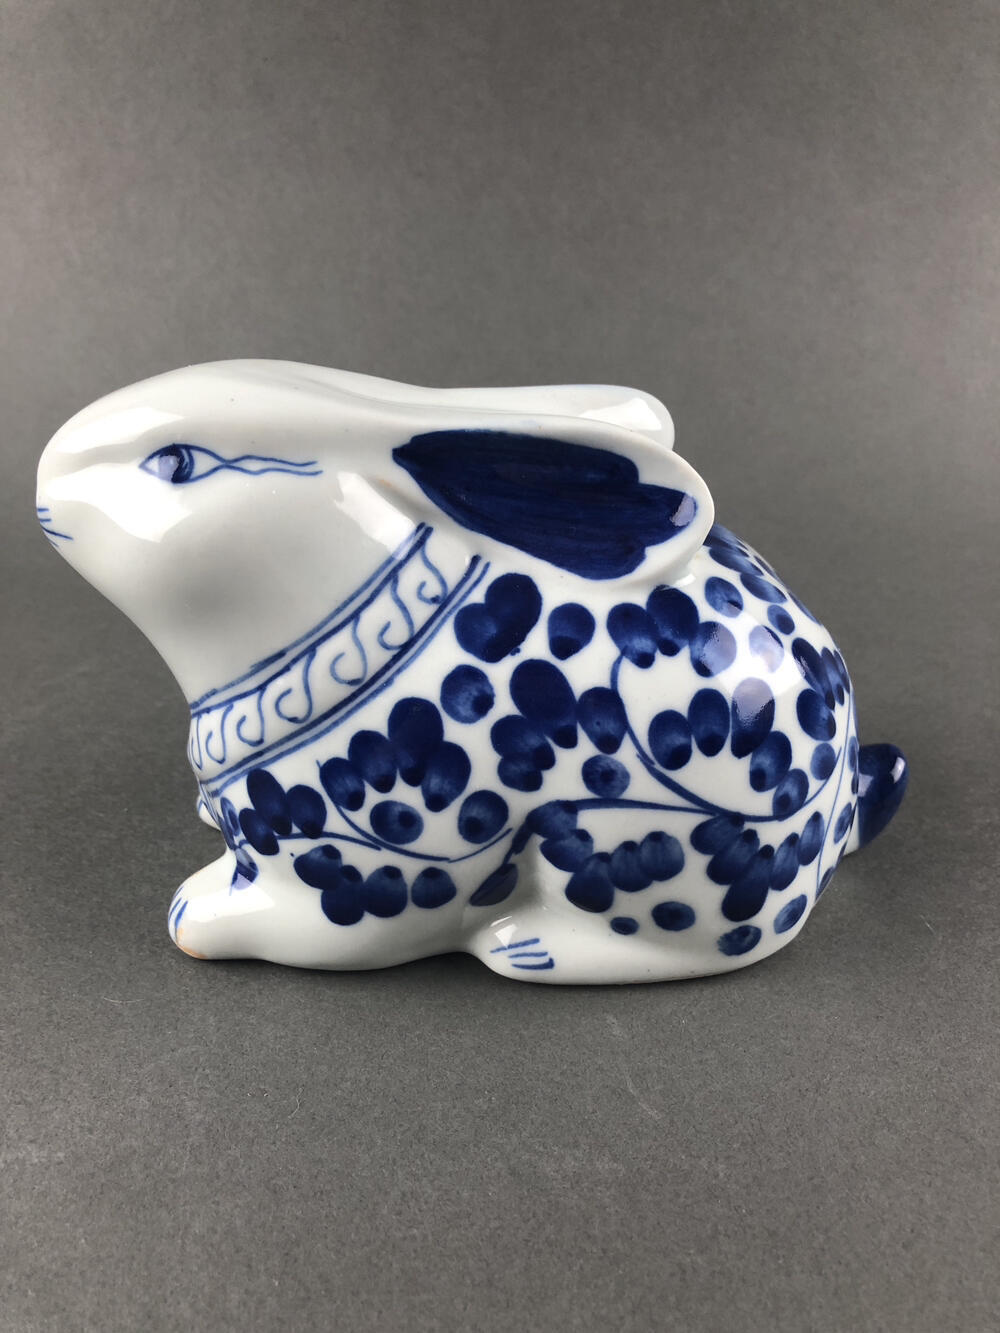 Vintage Blue and White Porcelain Bunny Rabbit Figurine Delft Look